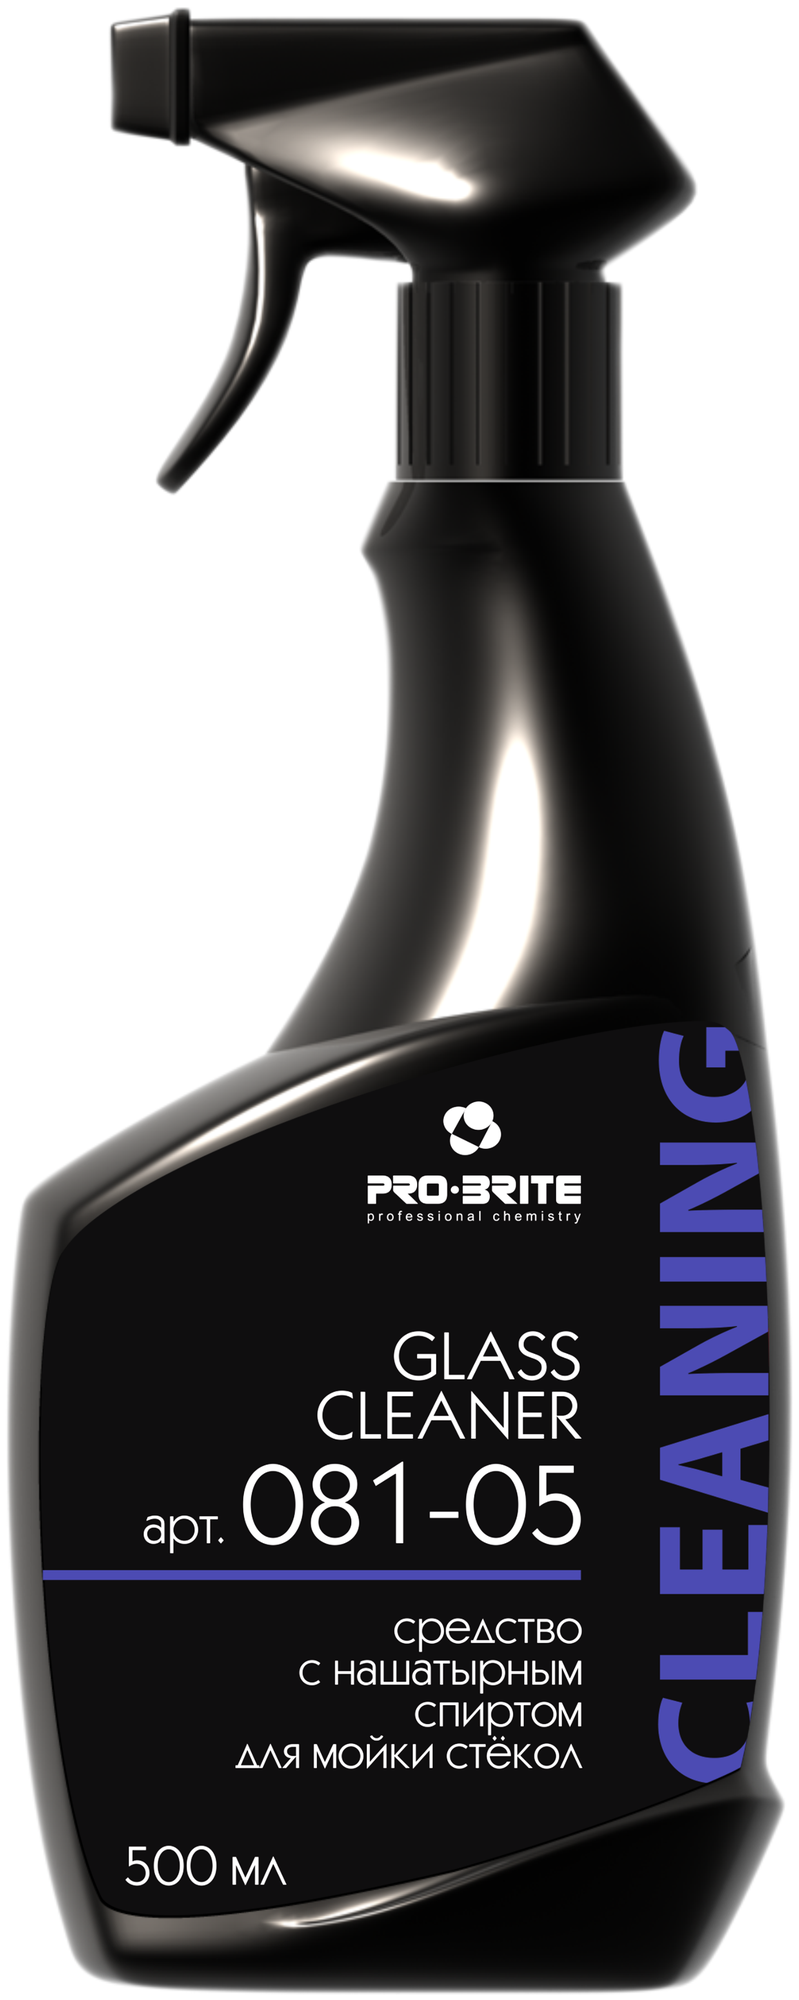 Glass Cleaner для мойки стёкол Pro-Brite, 500 мл, 500 г - фотография № 4